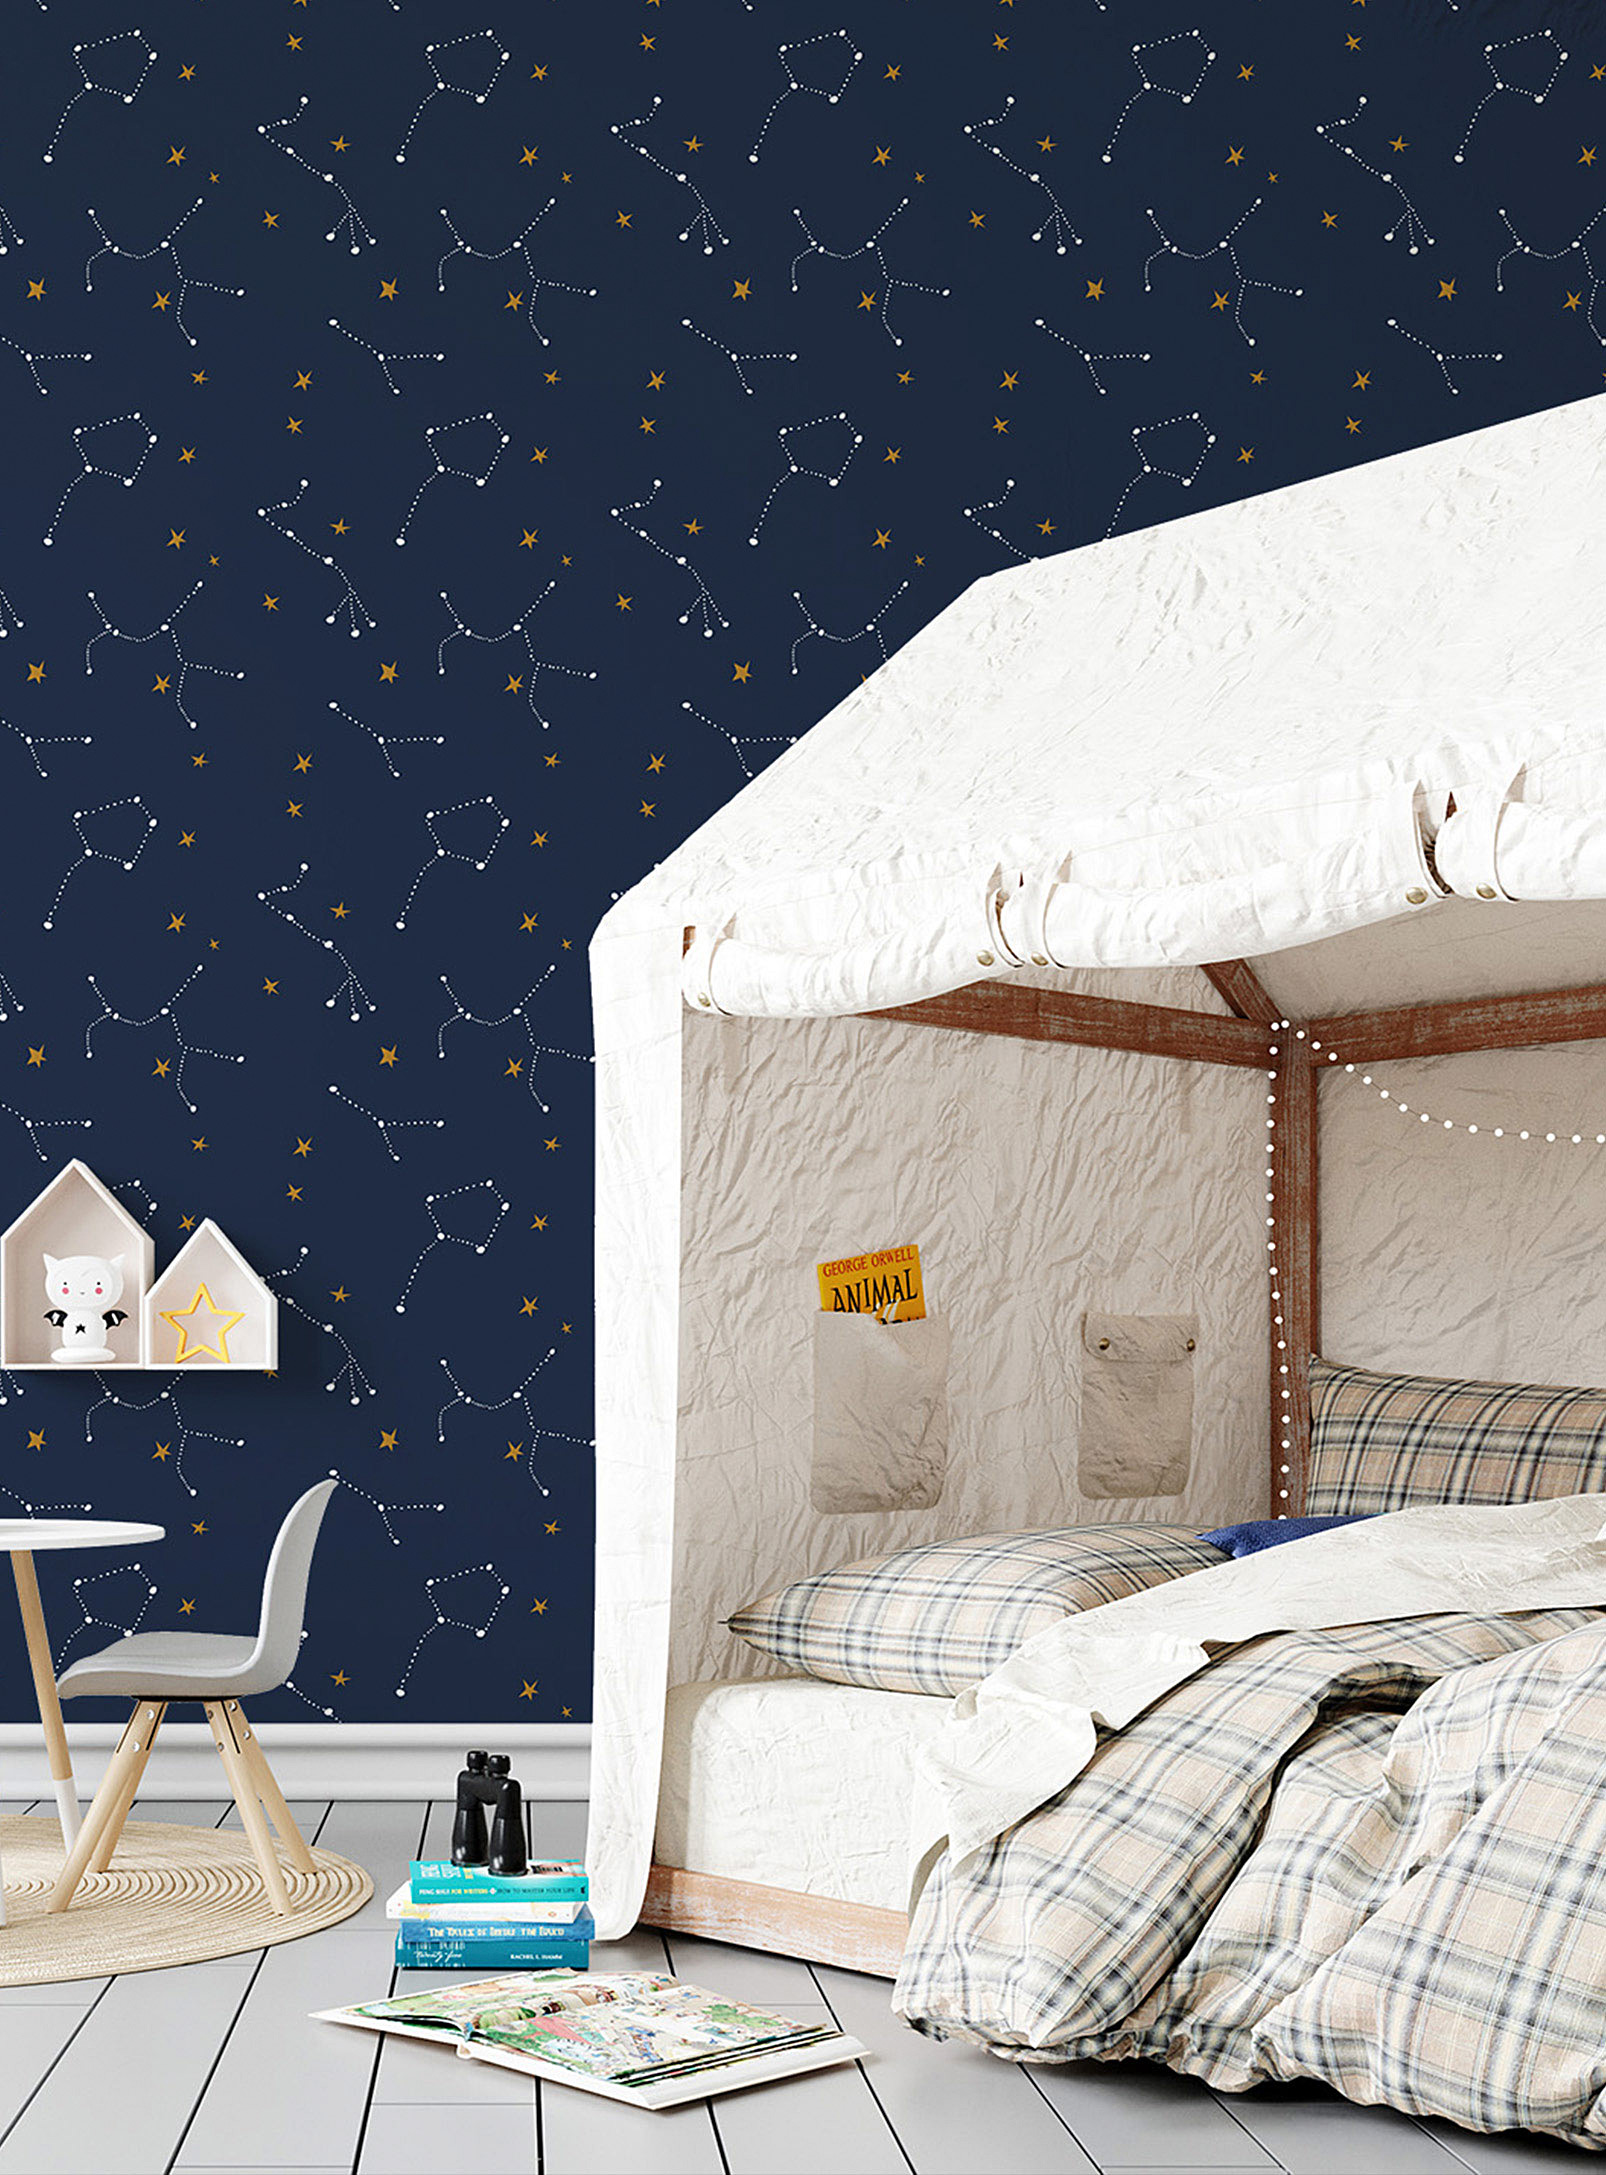 Meraki - Tête dans les étoiles self-adhesive wallpaper strip